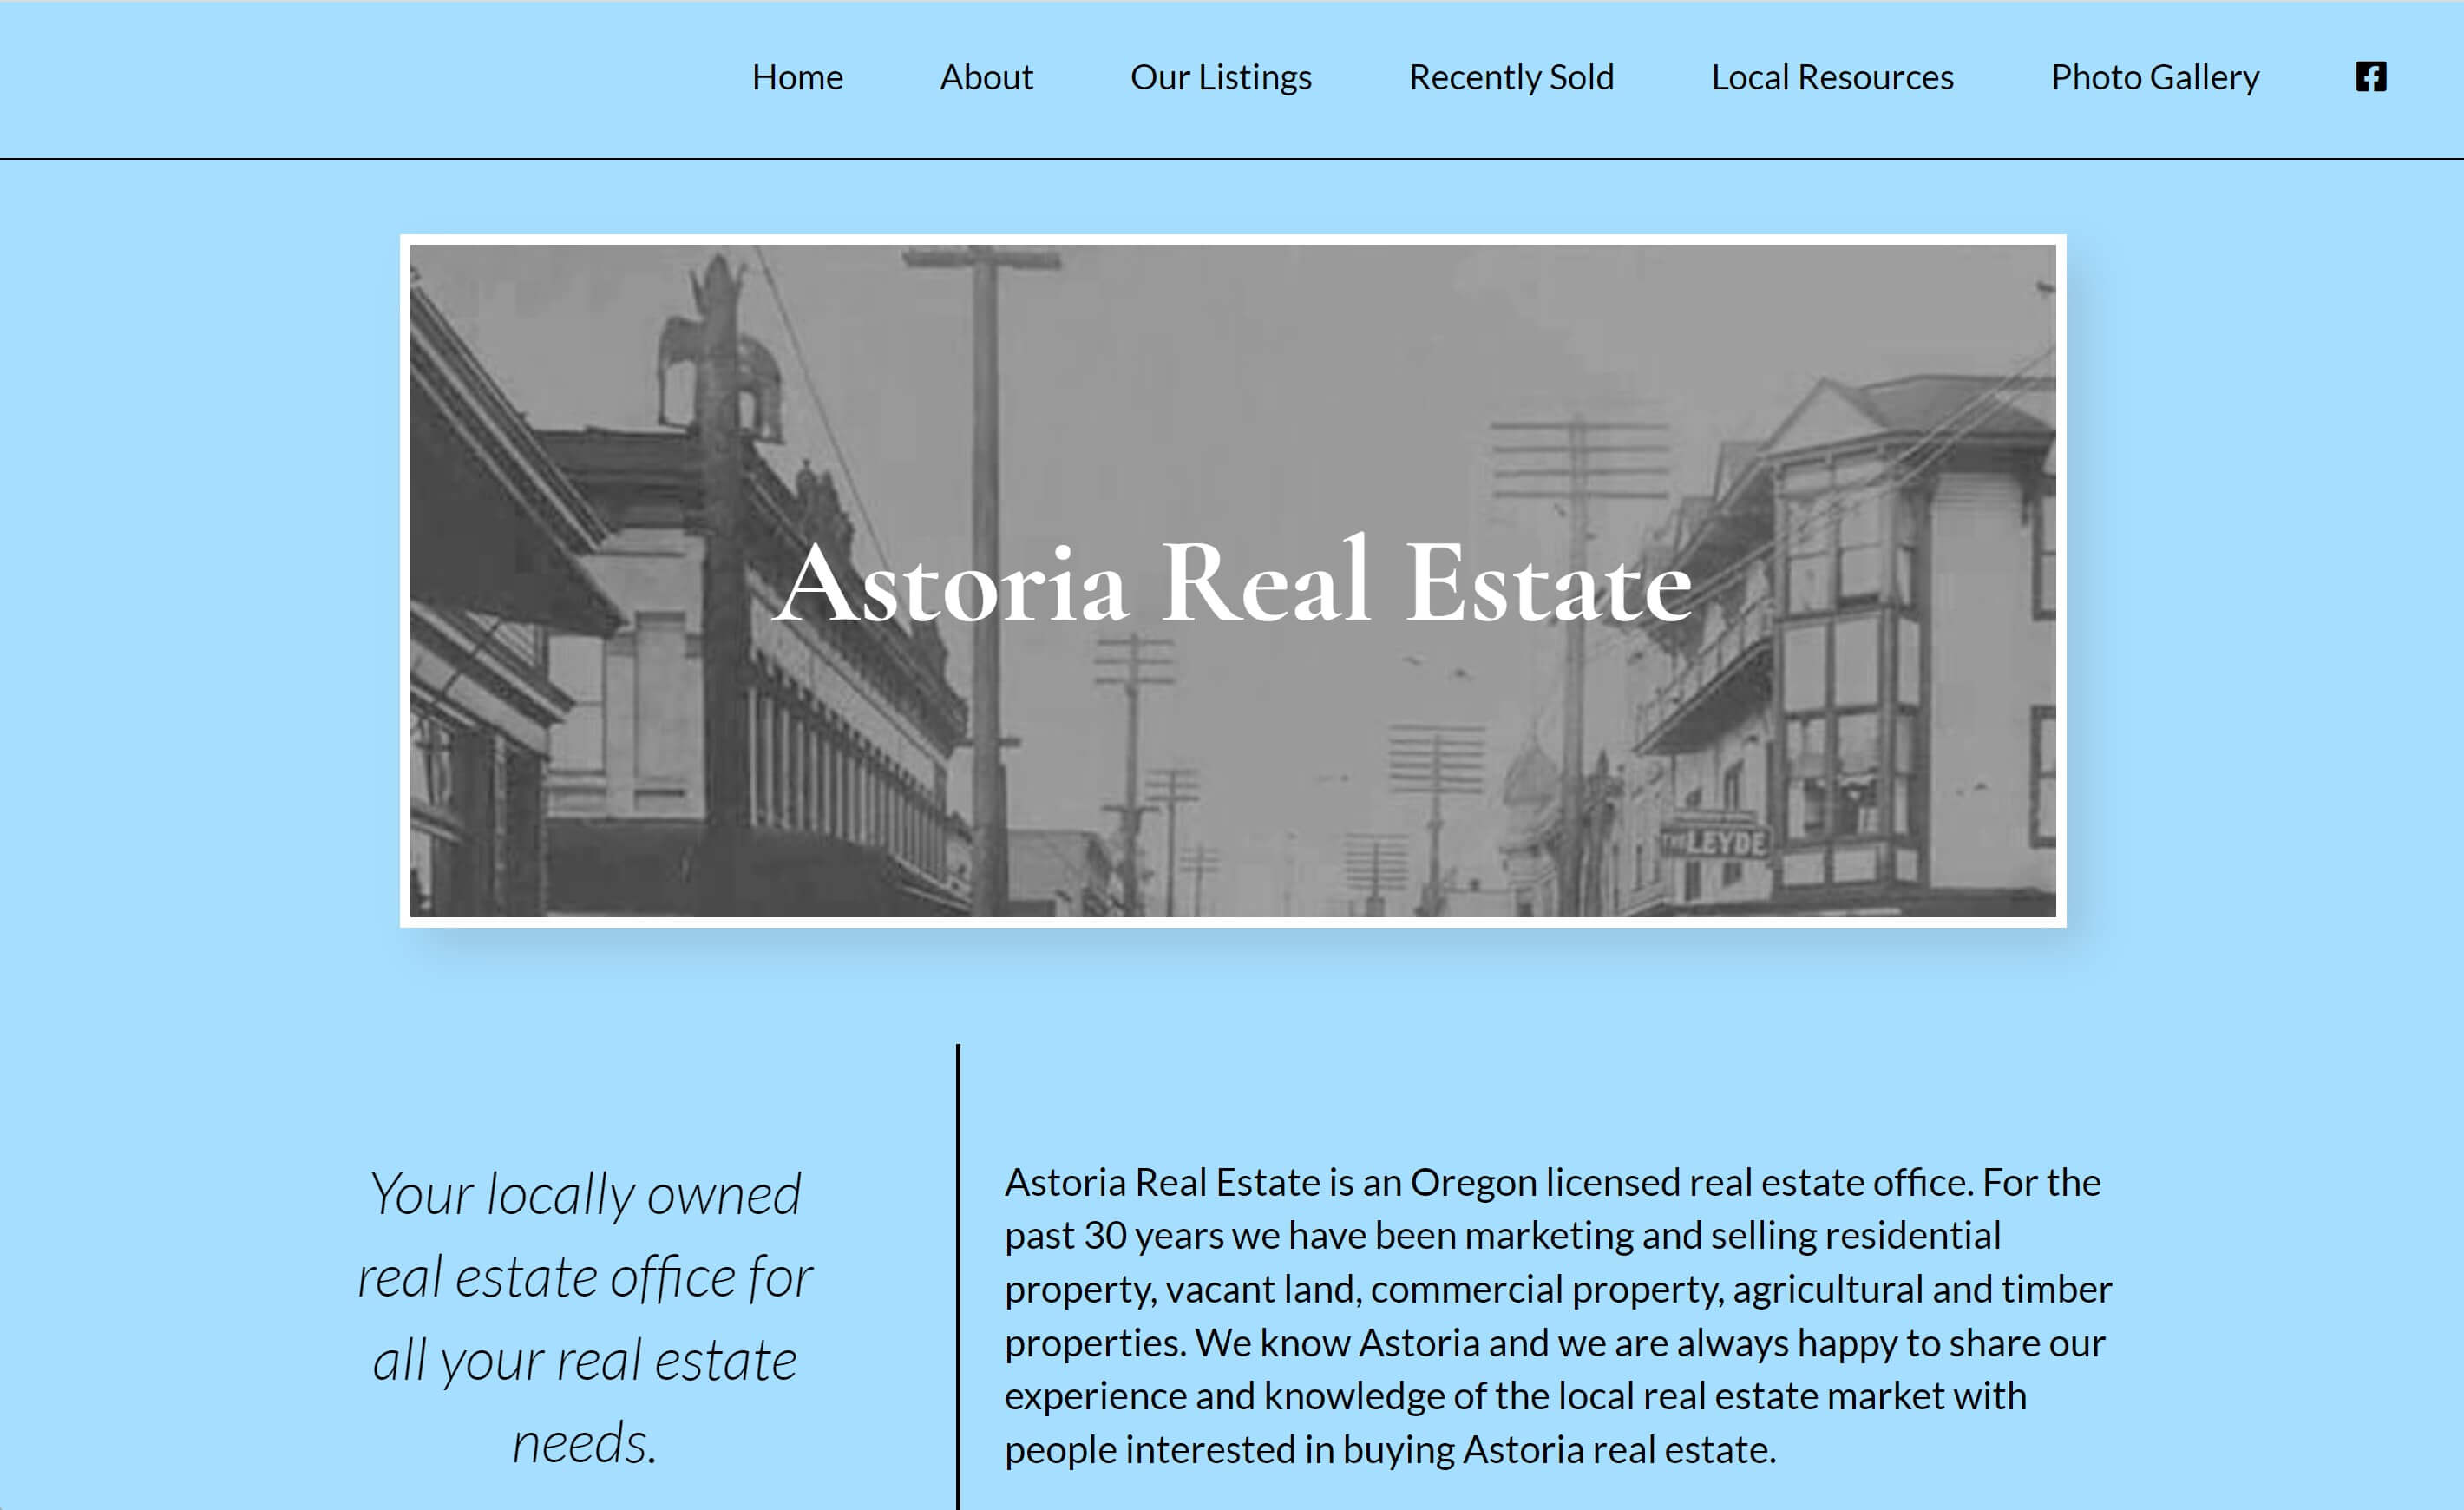 Astoria Real Estate website homepage.